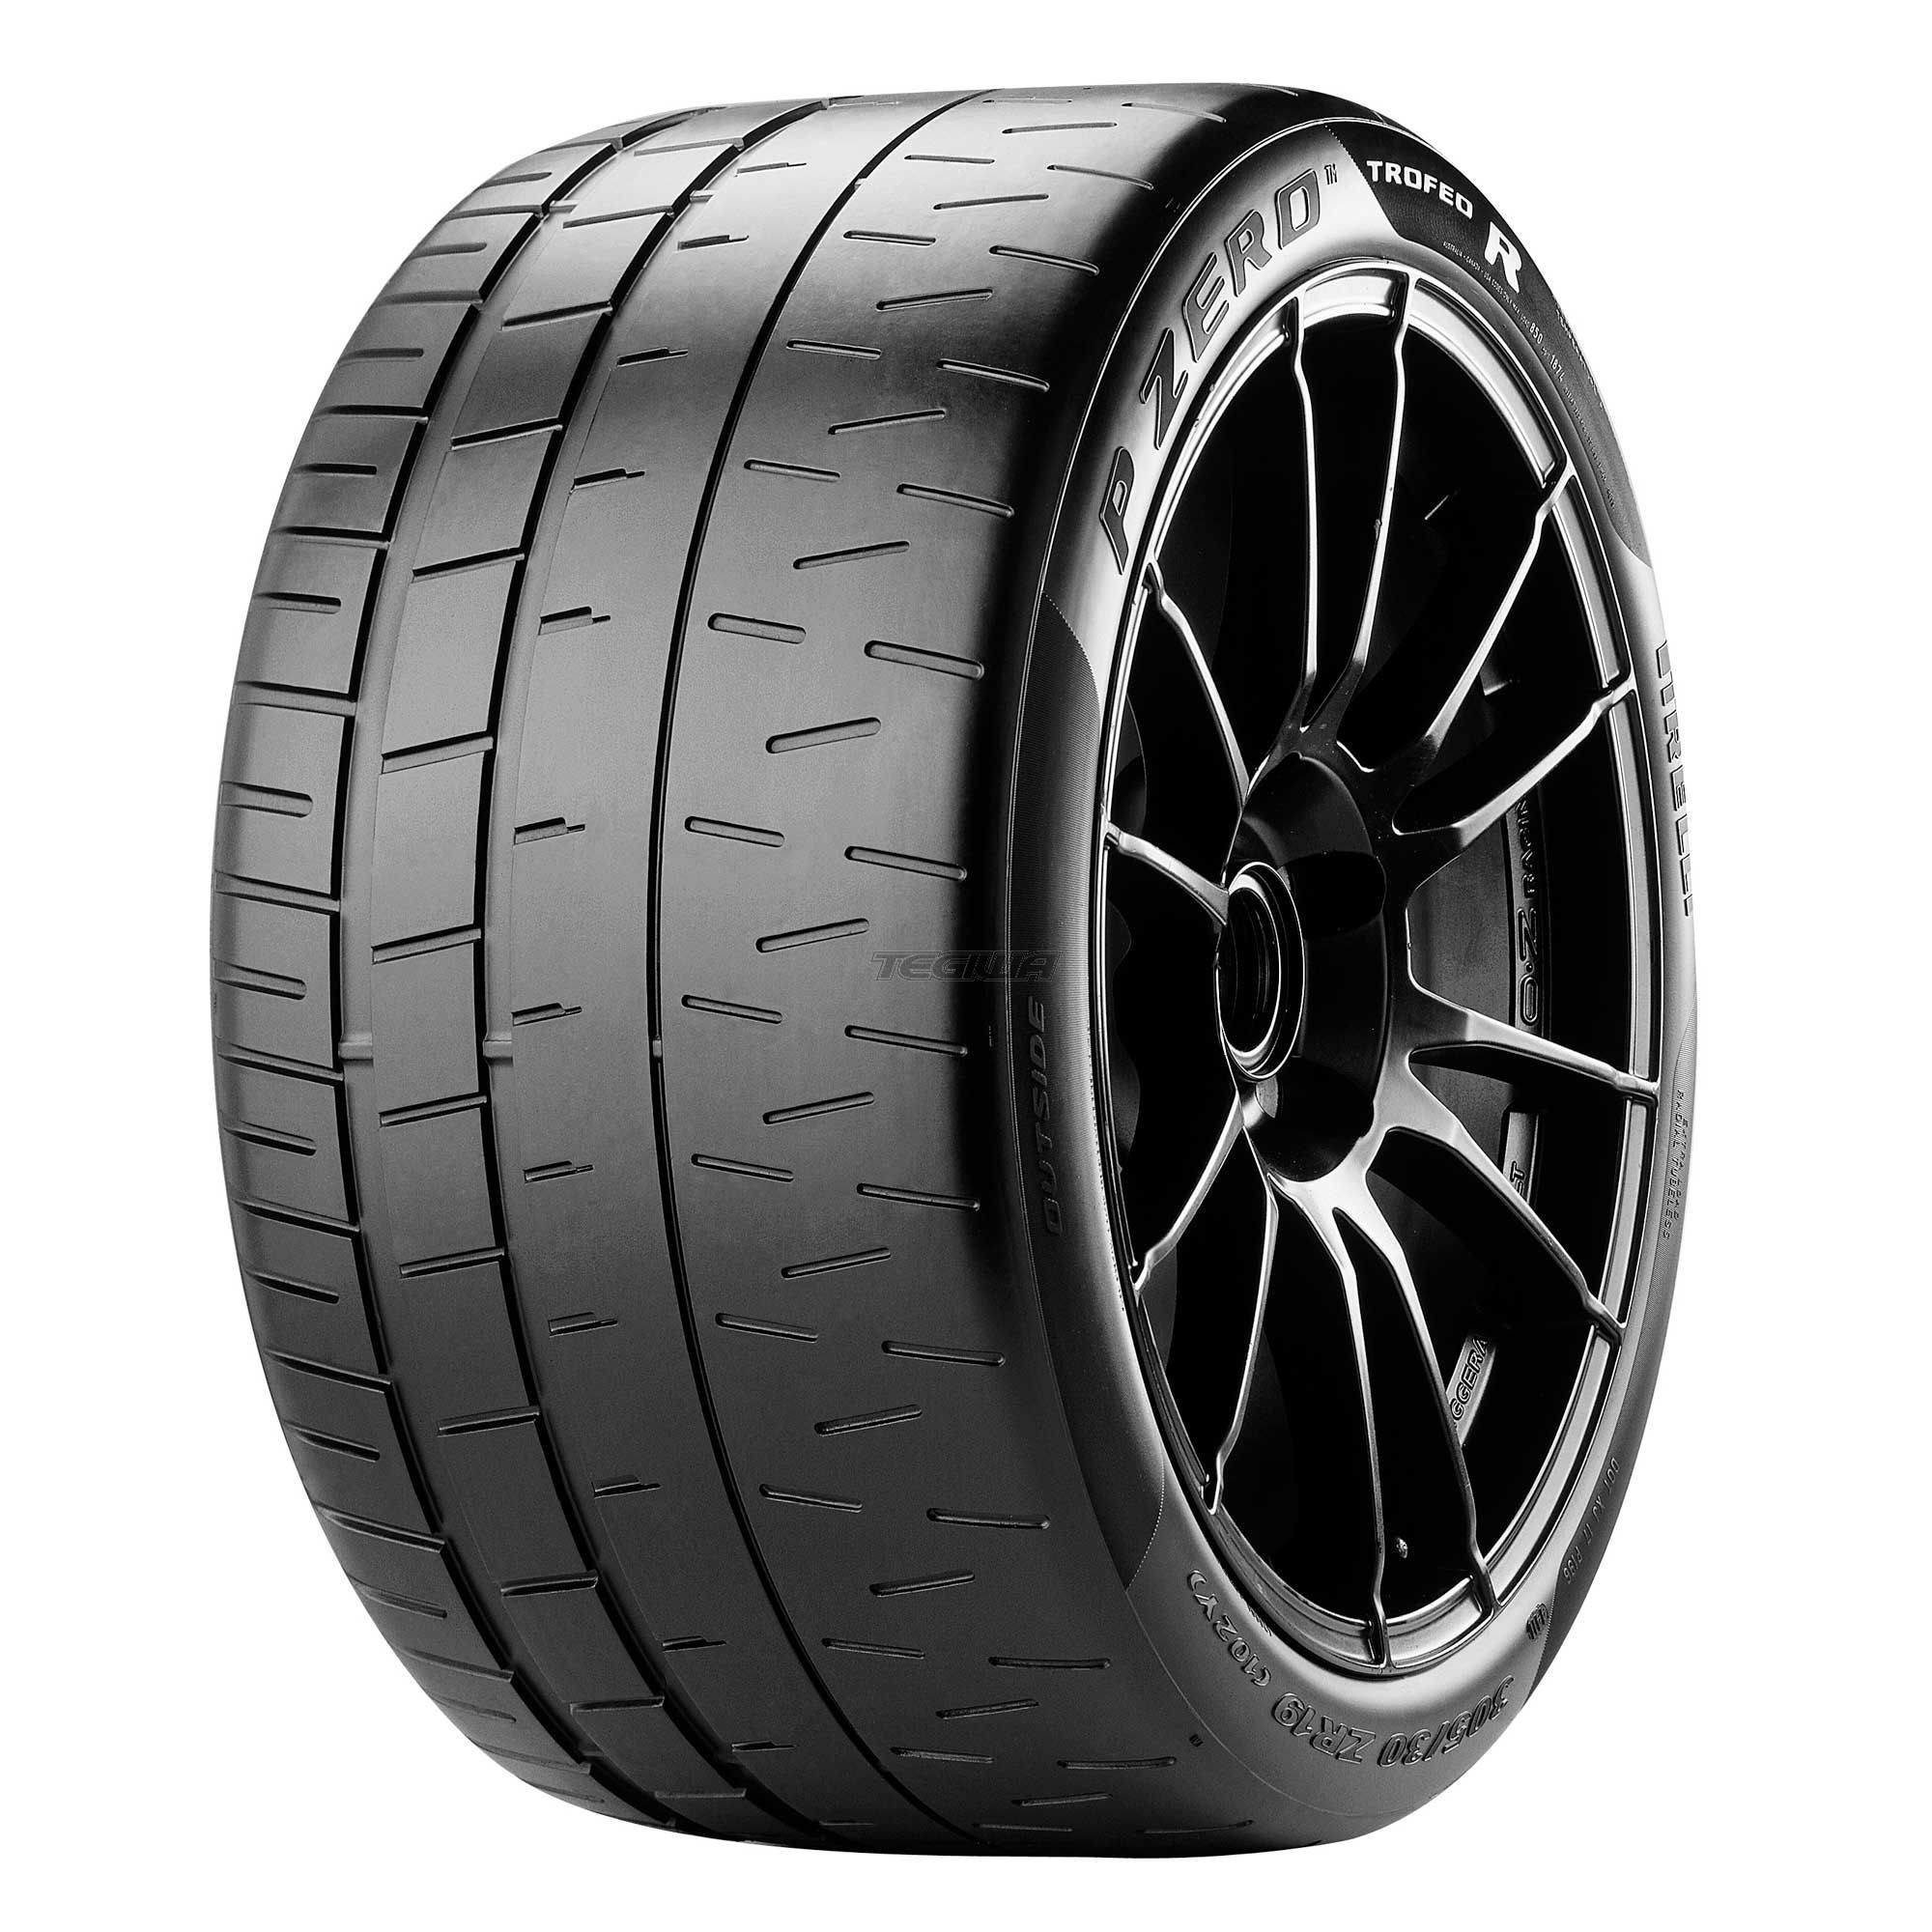 pirelli-p-zero-trofeo-r-race-semi-slick-track-tyre-by-pirelli-from-only